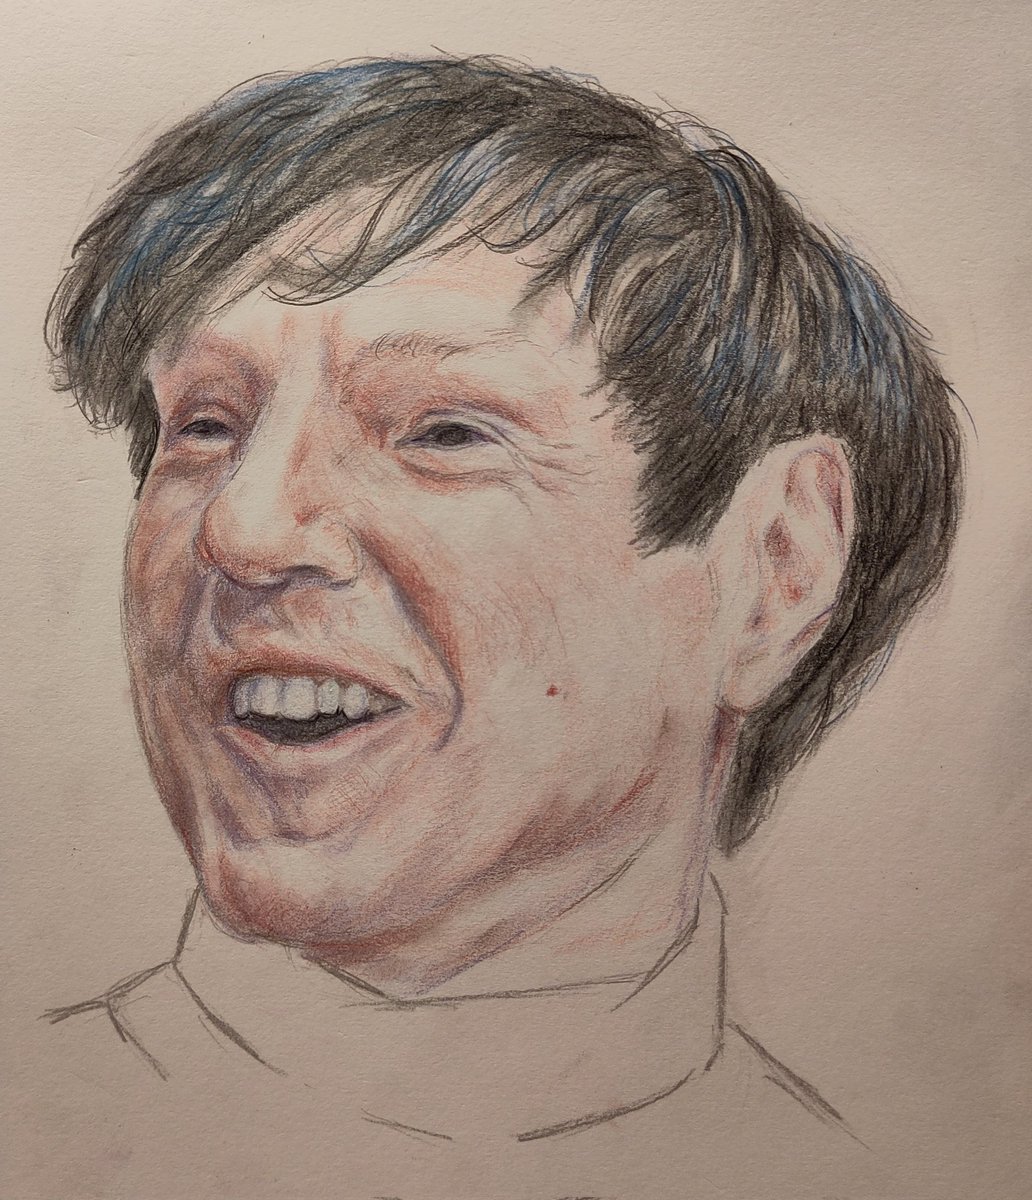 Pencil portrait of Russell Mael 

#sparksfanart #russellmael